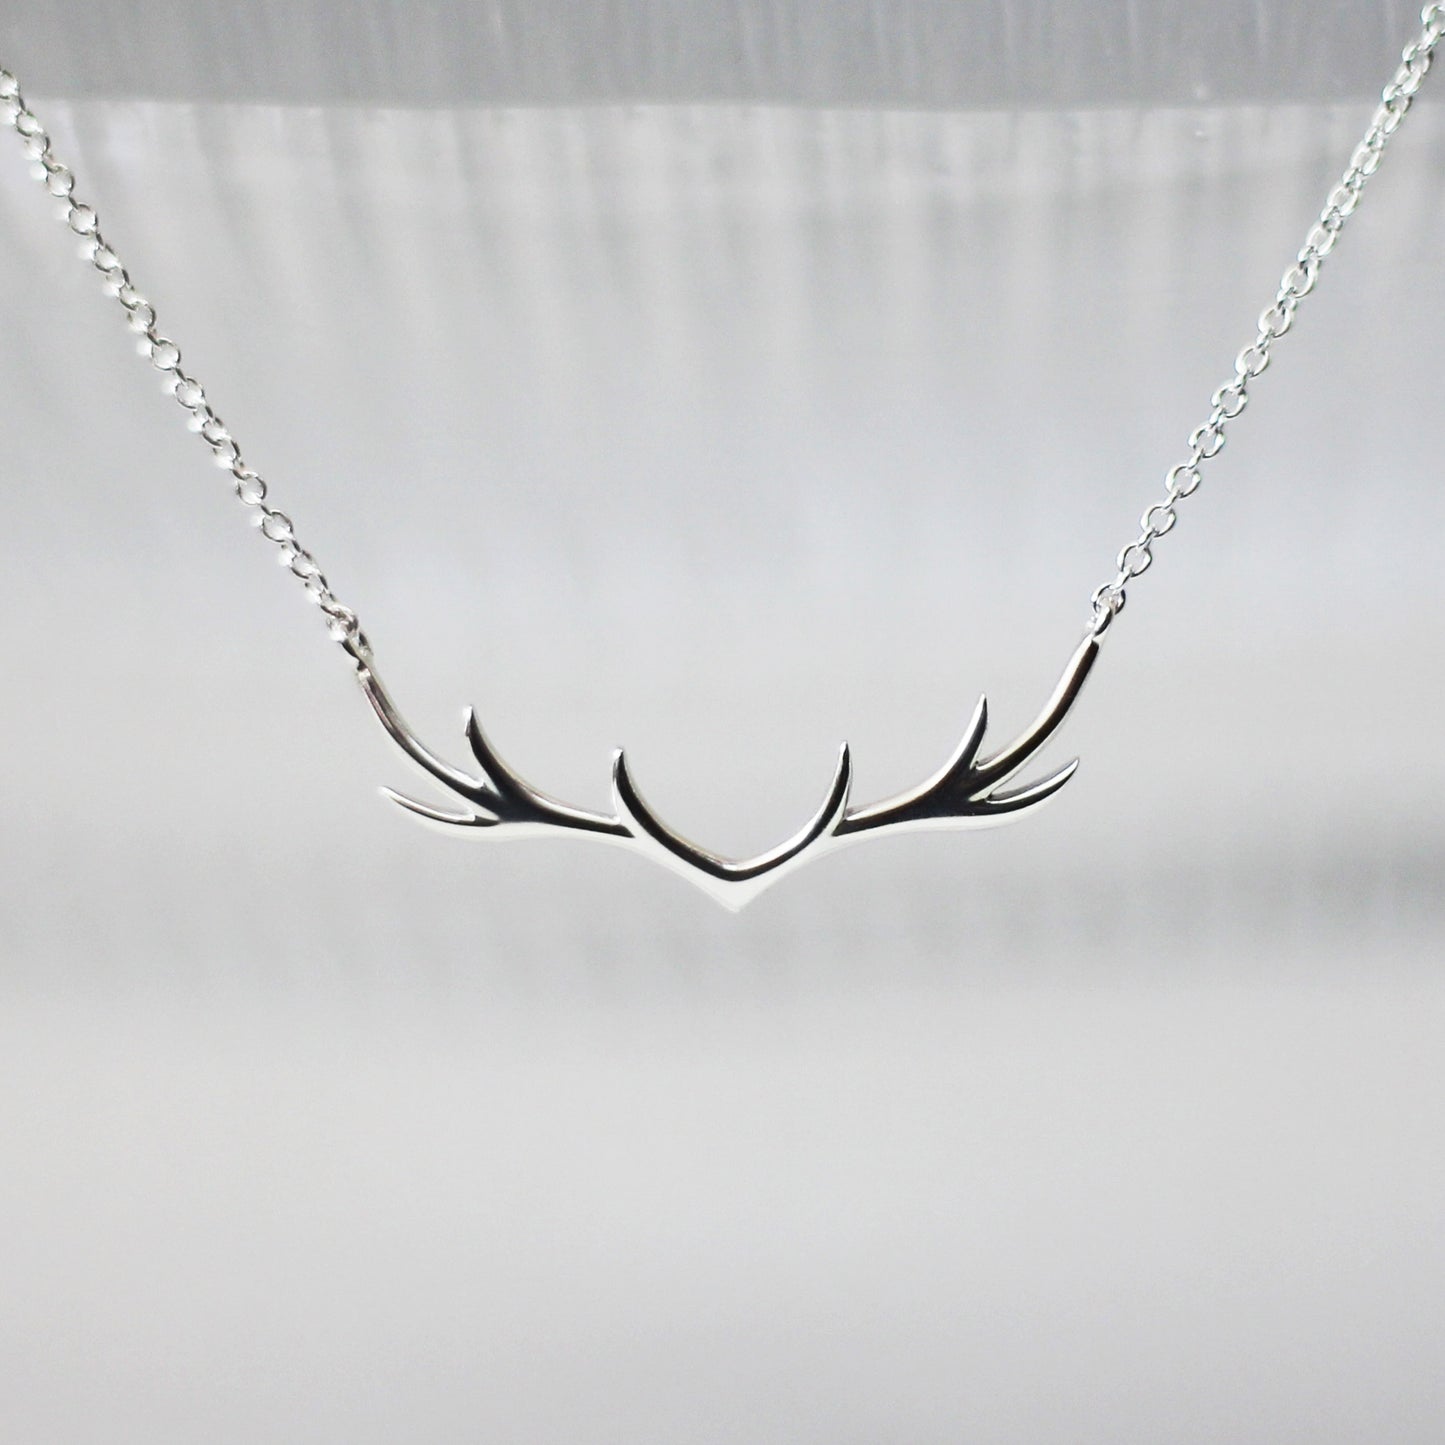 My Deer Necklace - Silver